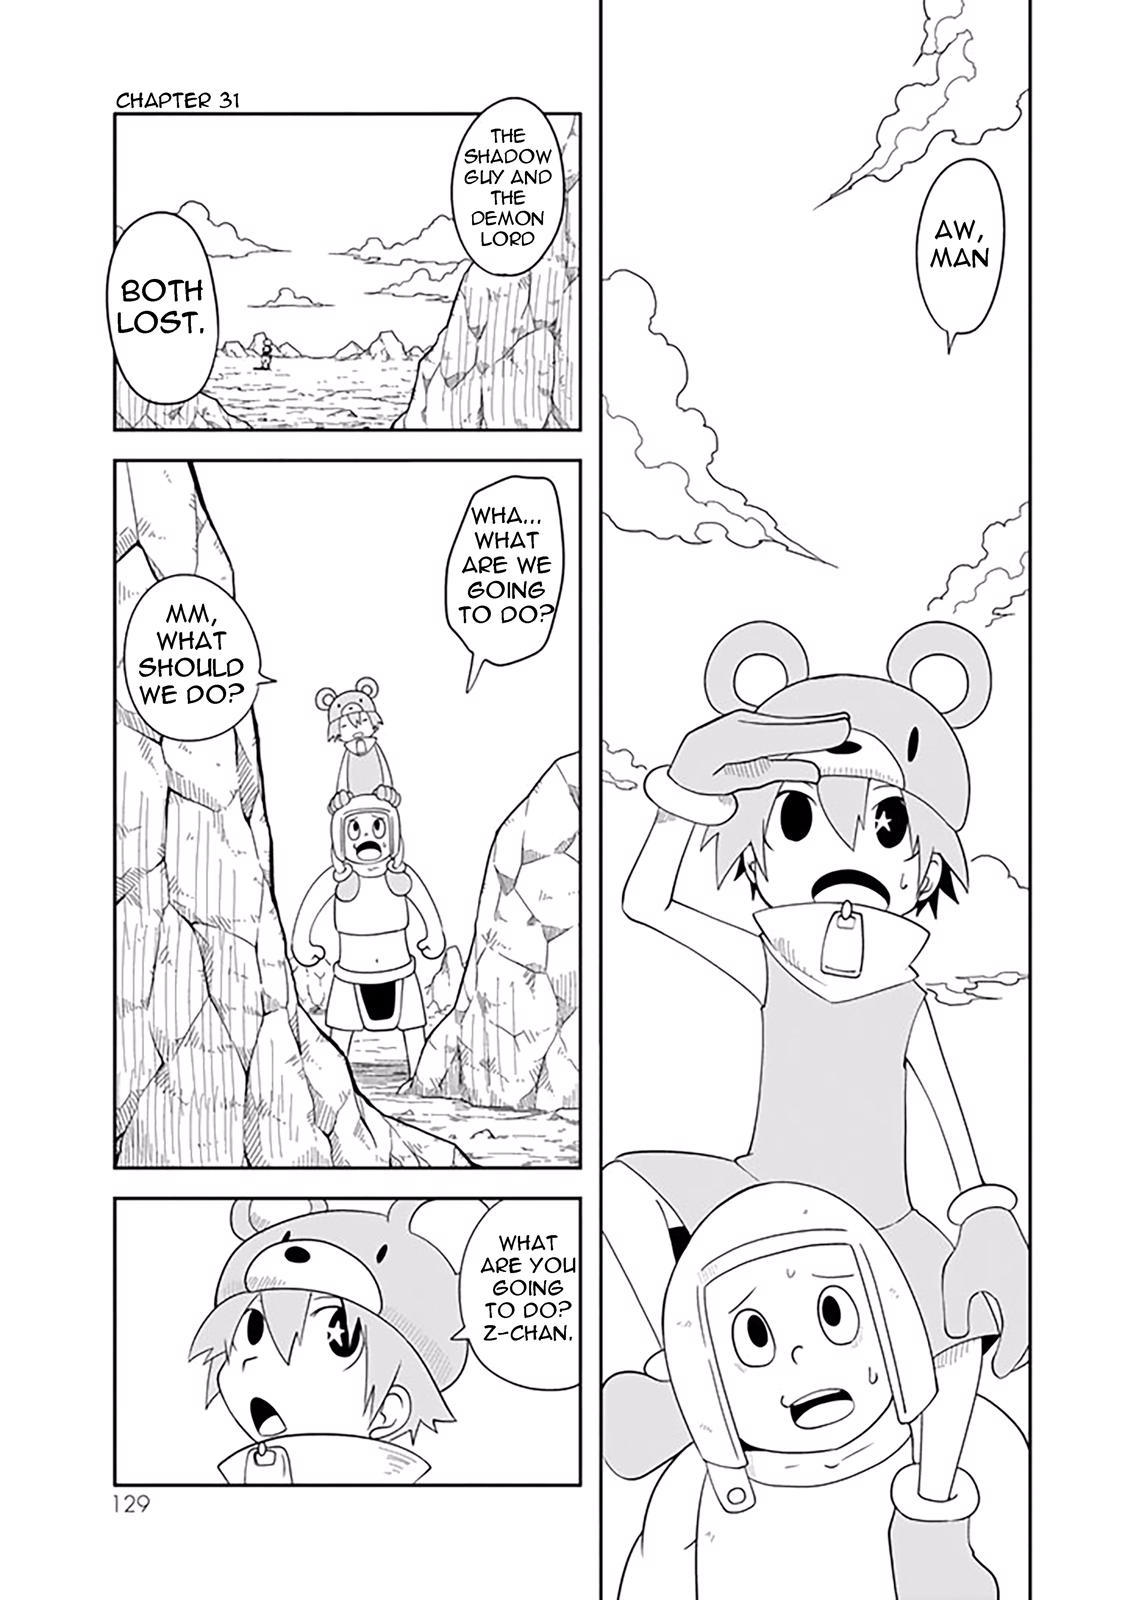 Senyuu. Main Quest Part 1 Vol. 3 Ch. 31 The Hero Resolves